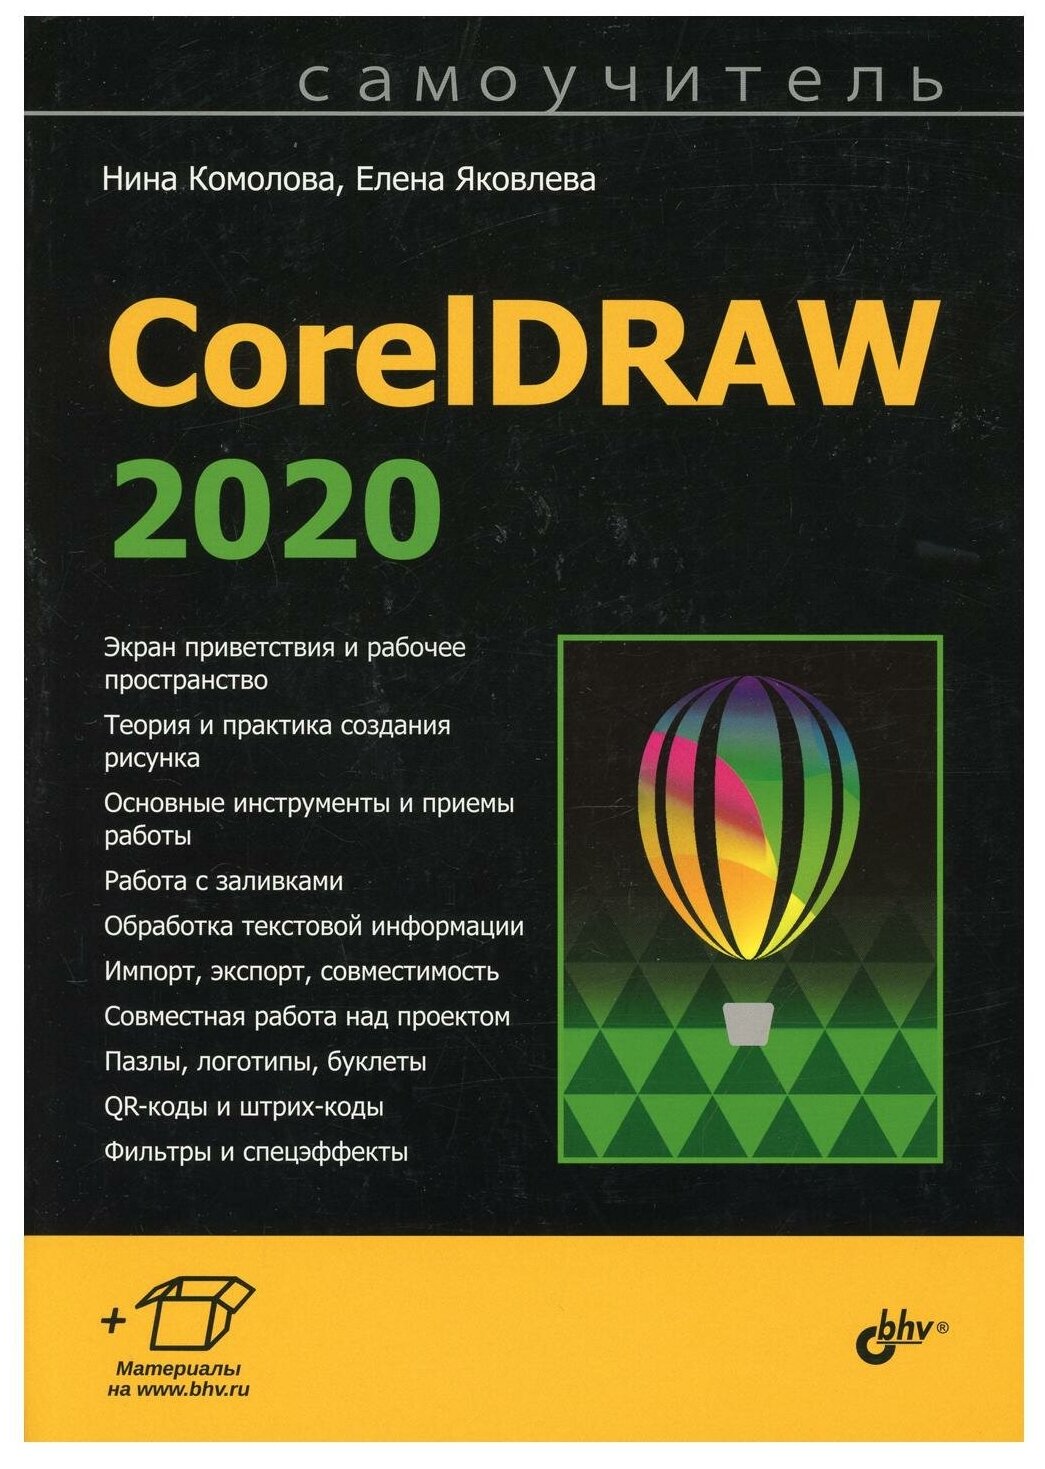 CorelDRAW 2020. Самоучитель